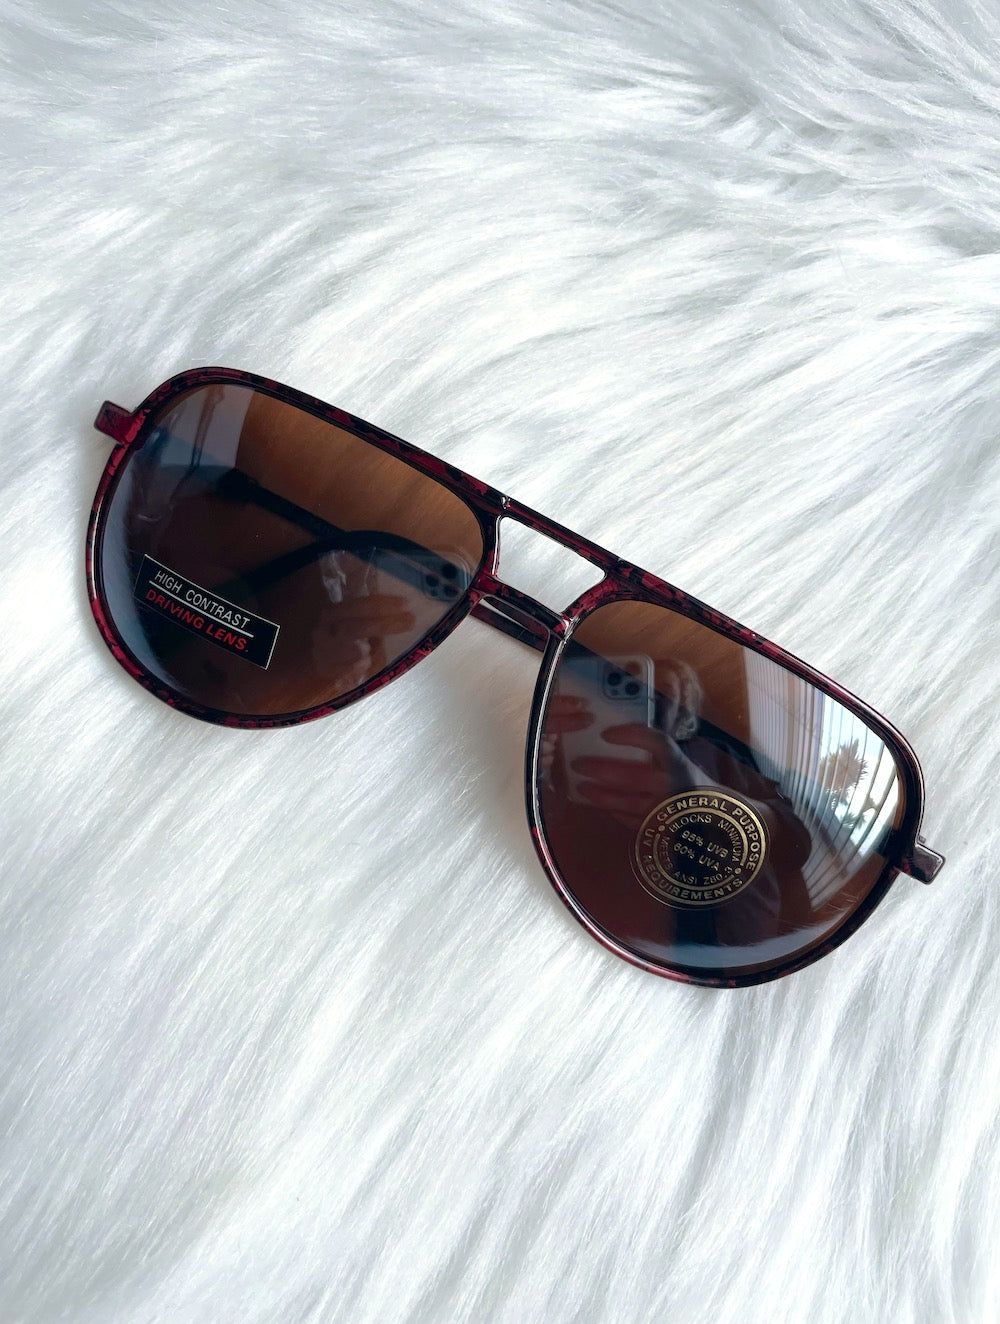 Vintage 80s Red and Black Speckle Print Aviator Sunglasses Dad Retro